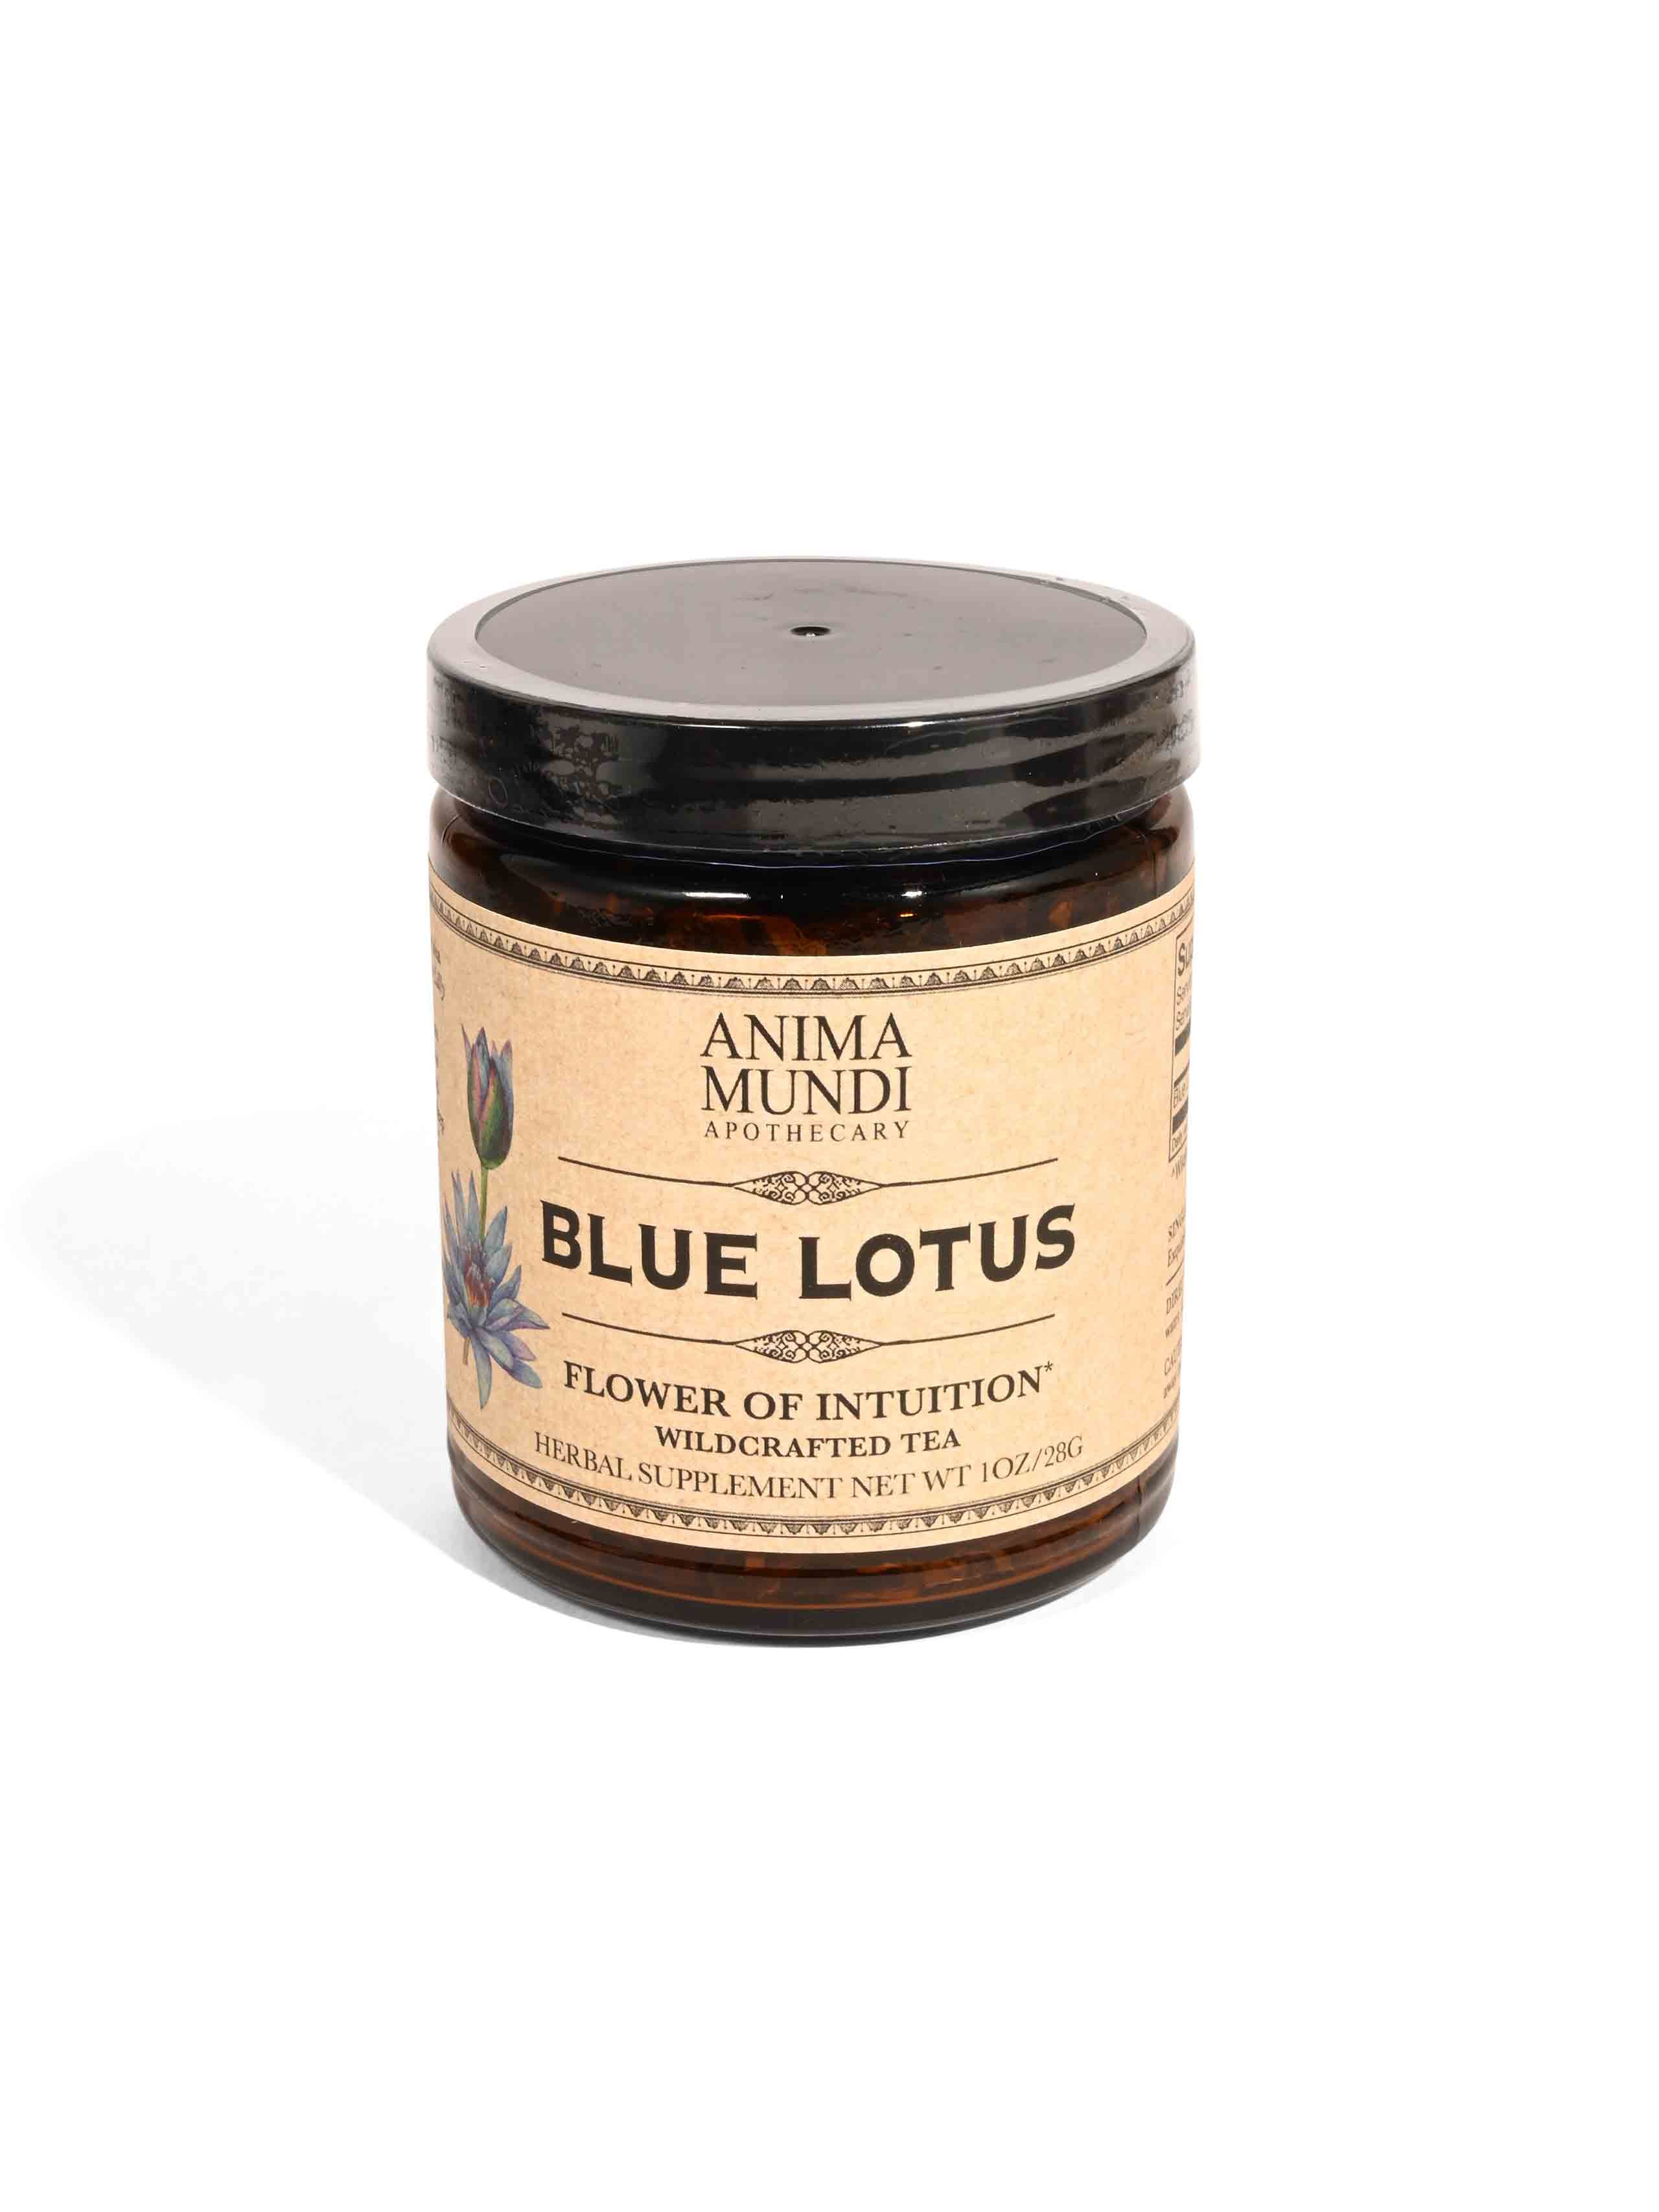 Blue Lotus Tea – ELIXART